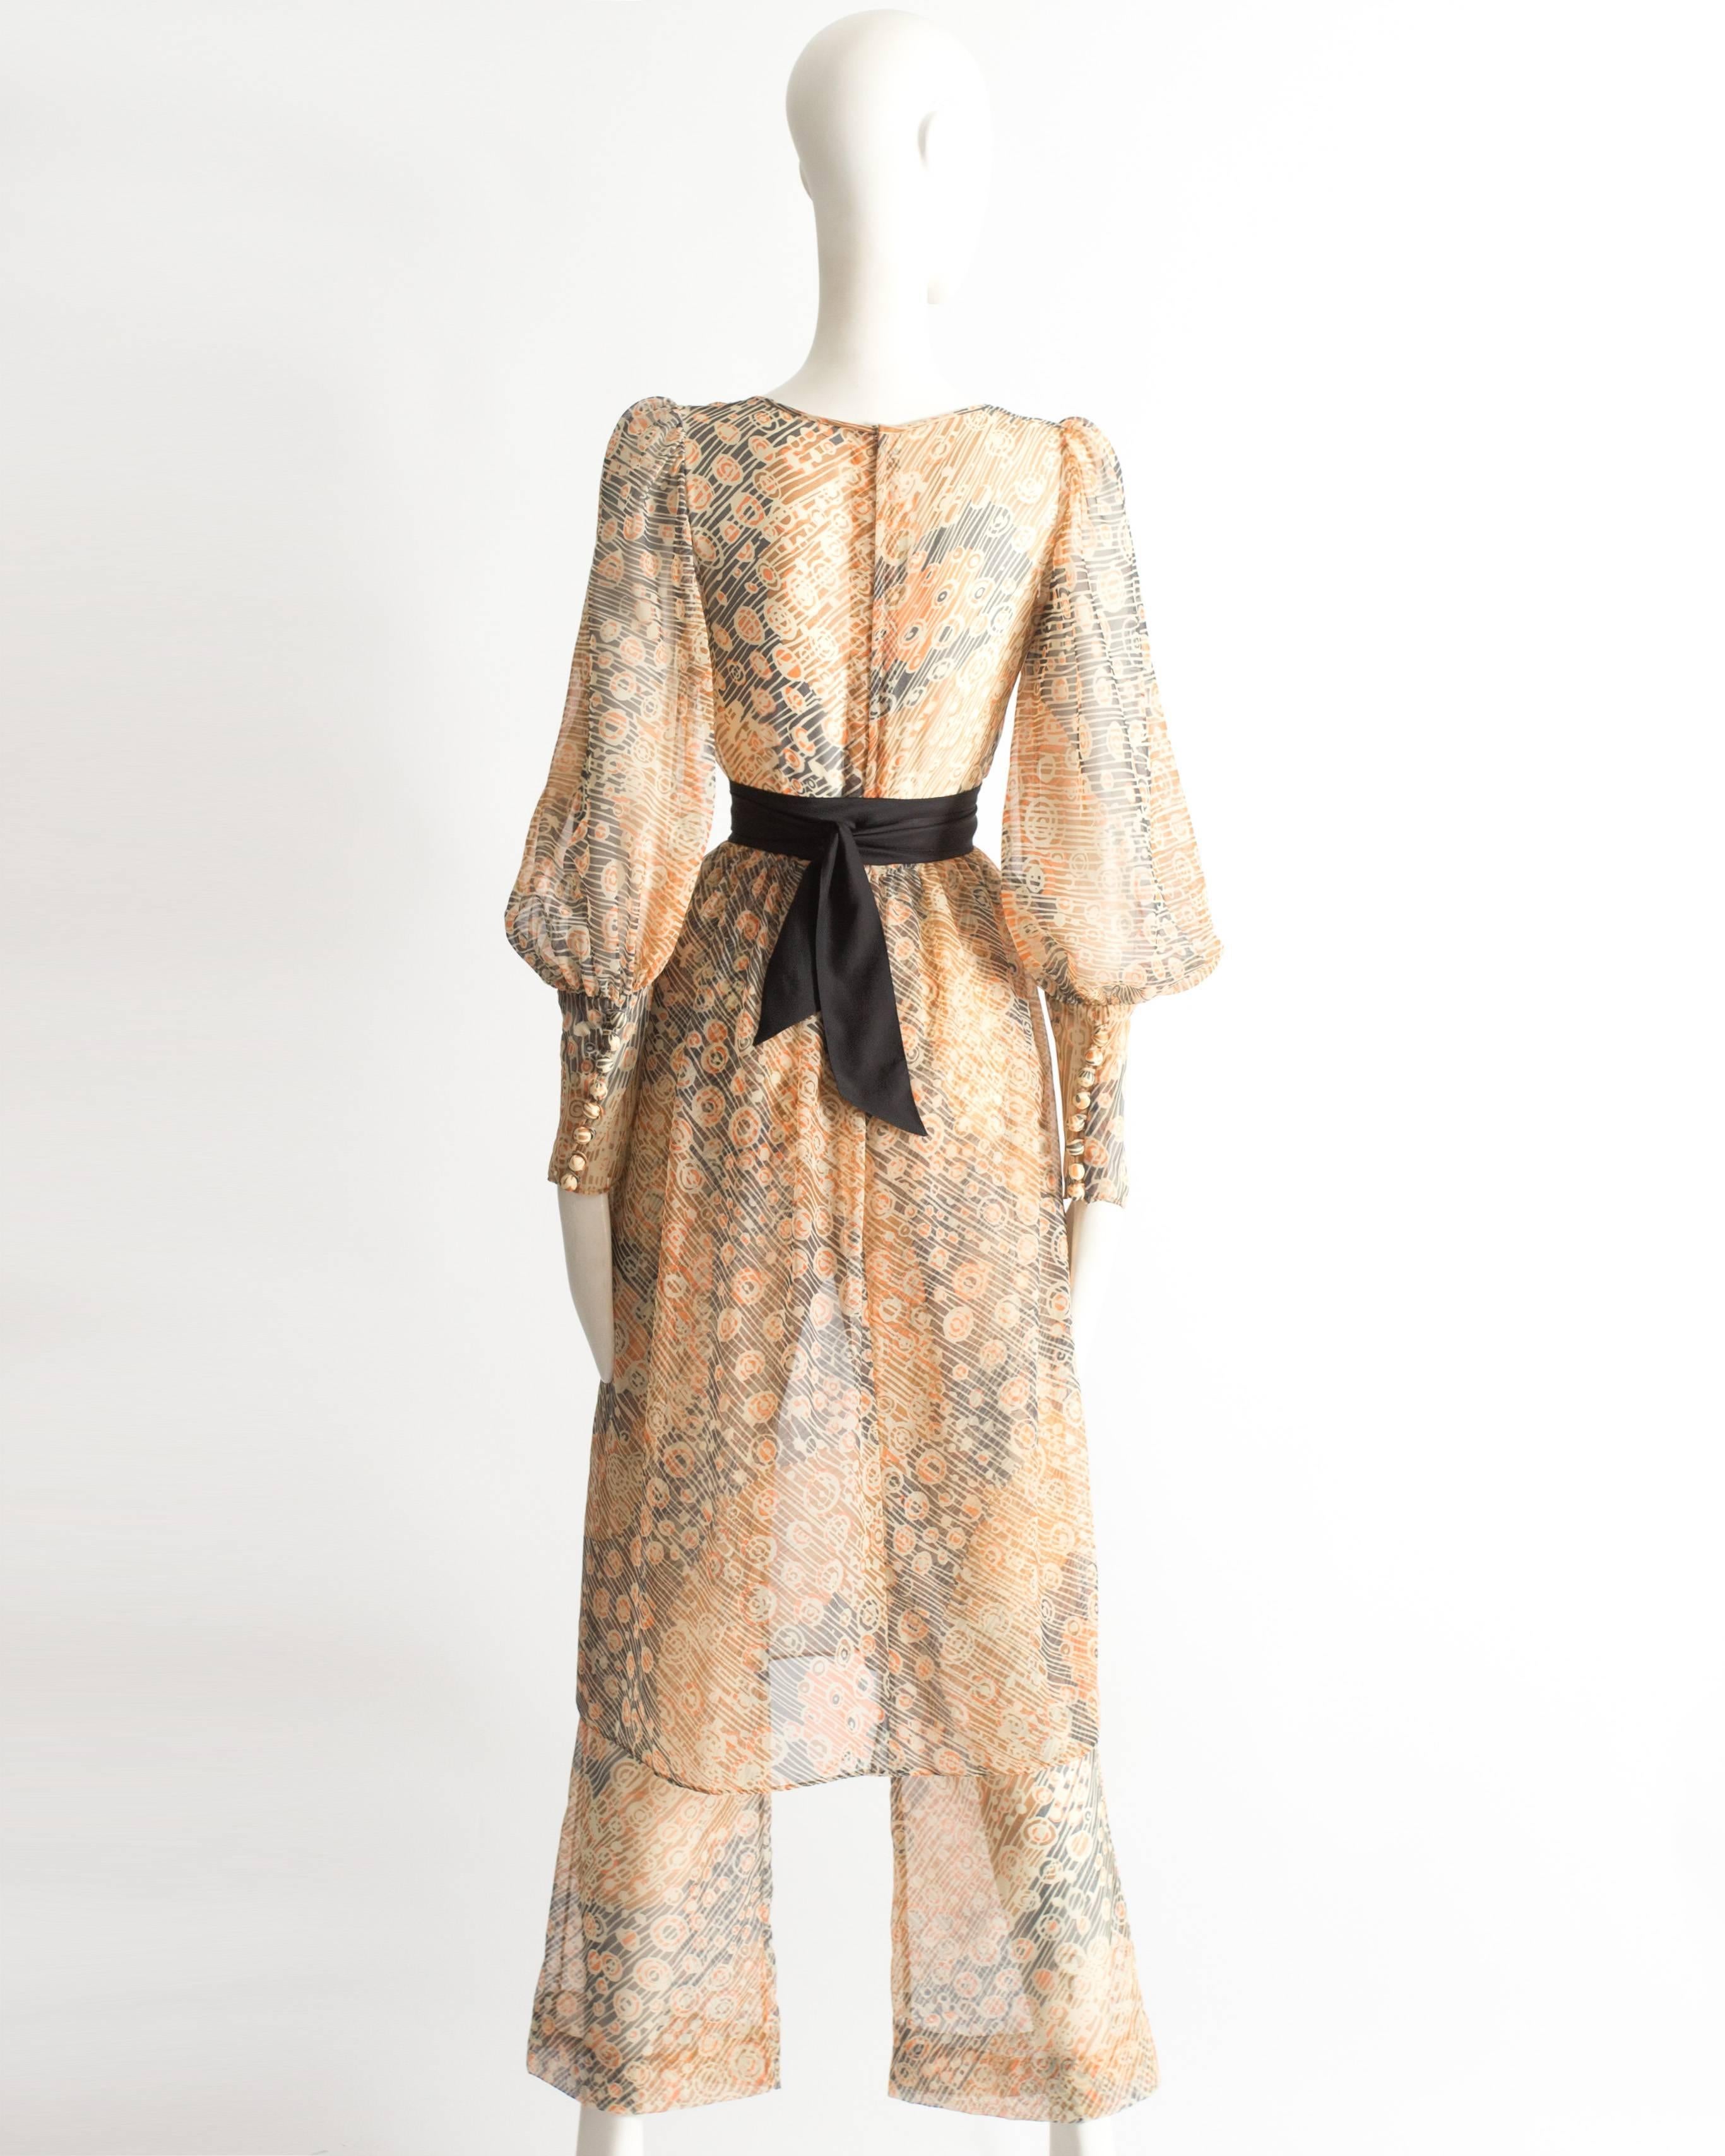 Jean Varon voile summer dress and pants ensemble, circa 1971 2